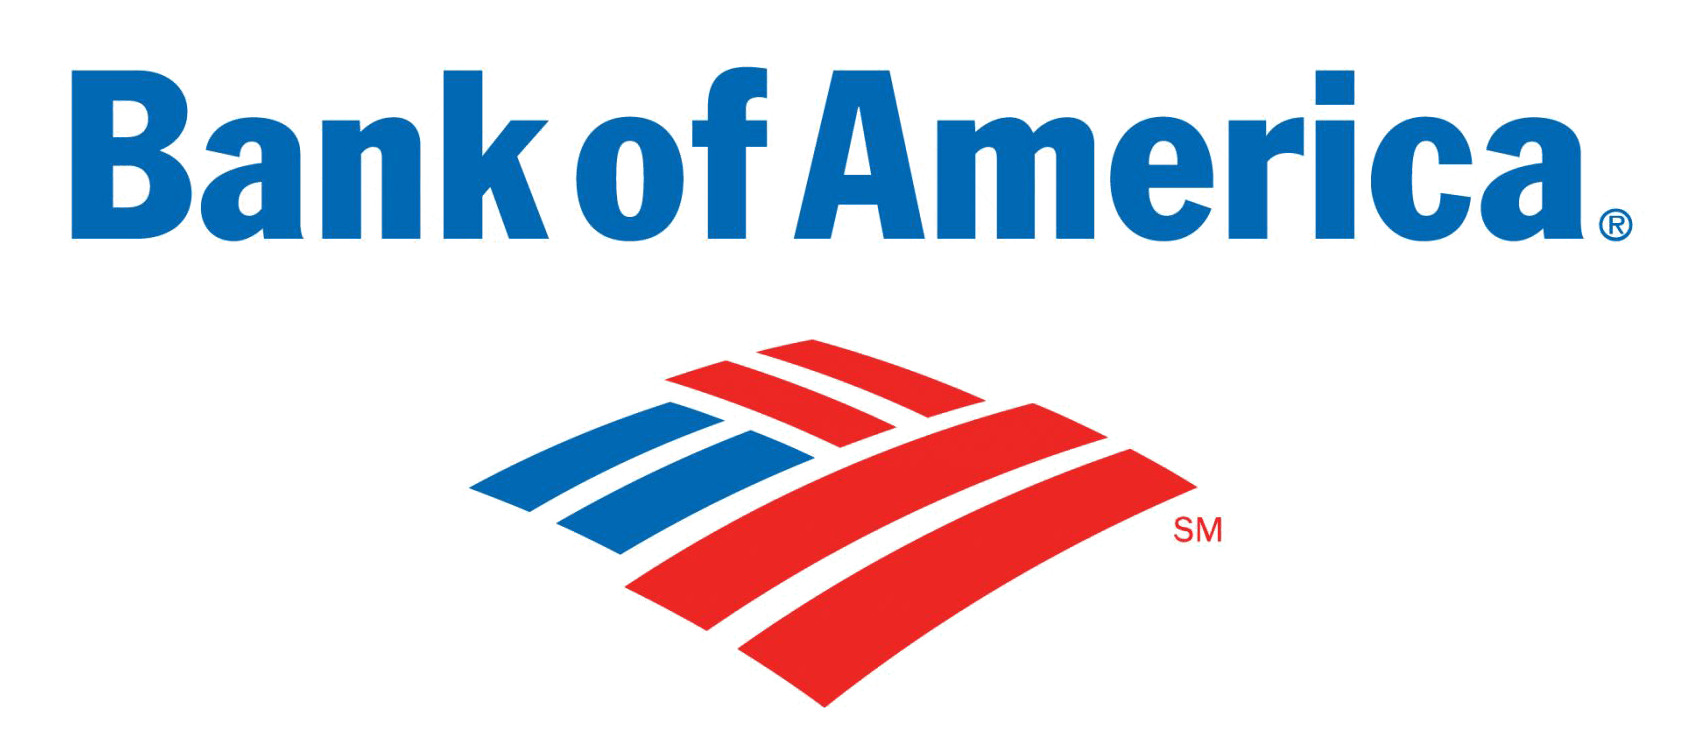 Of America Bank Logo Free Download PNG HQ PNG Image